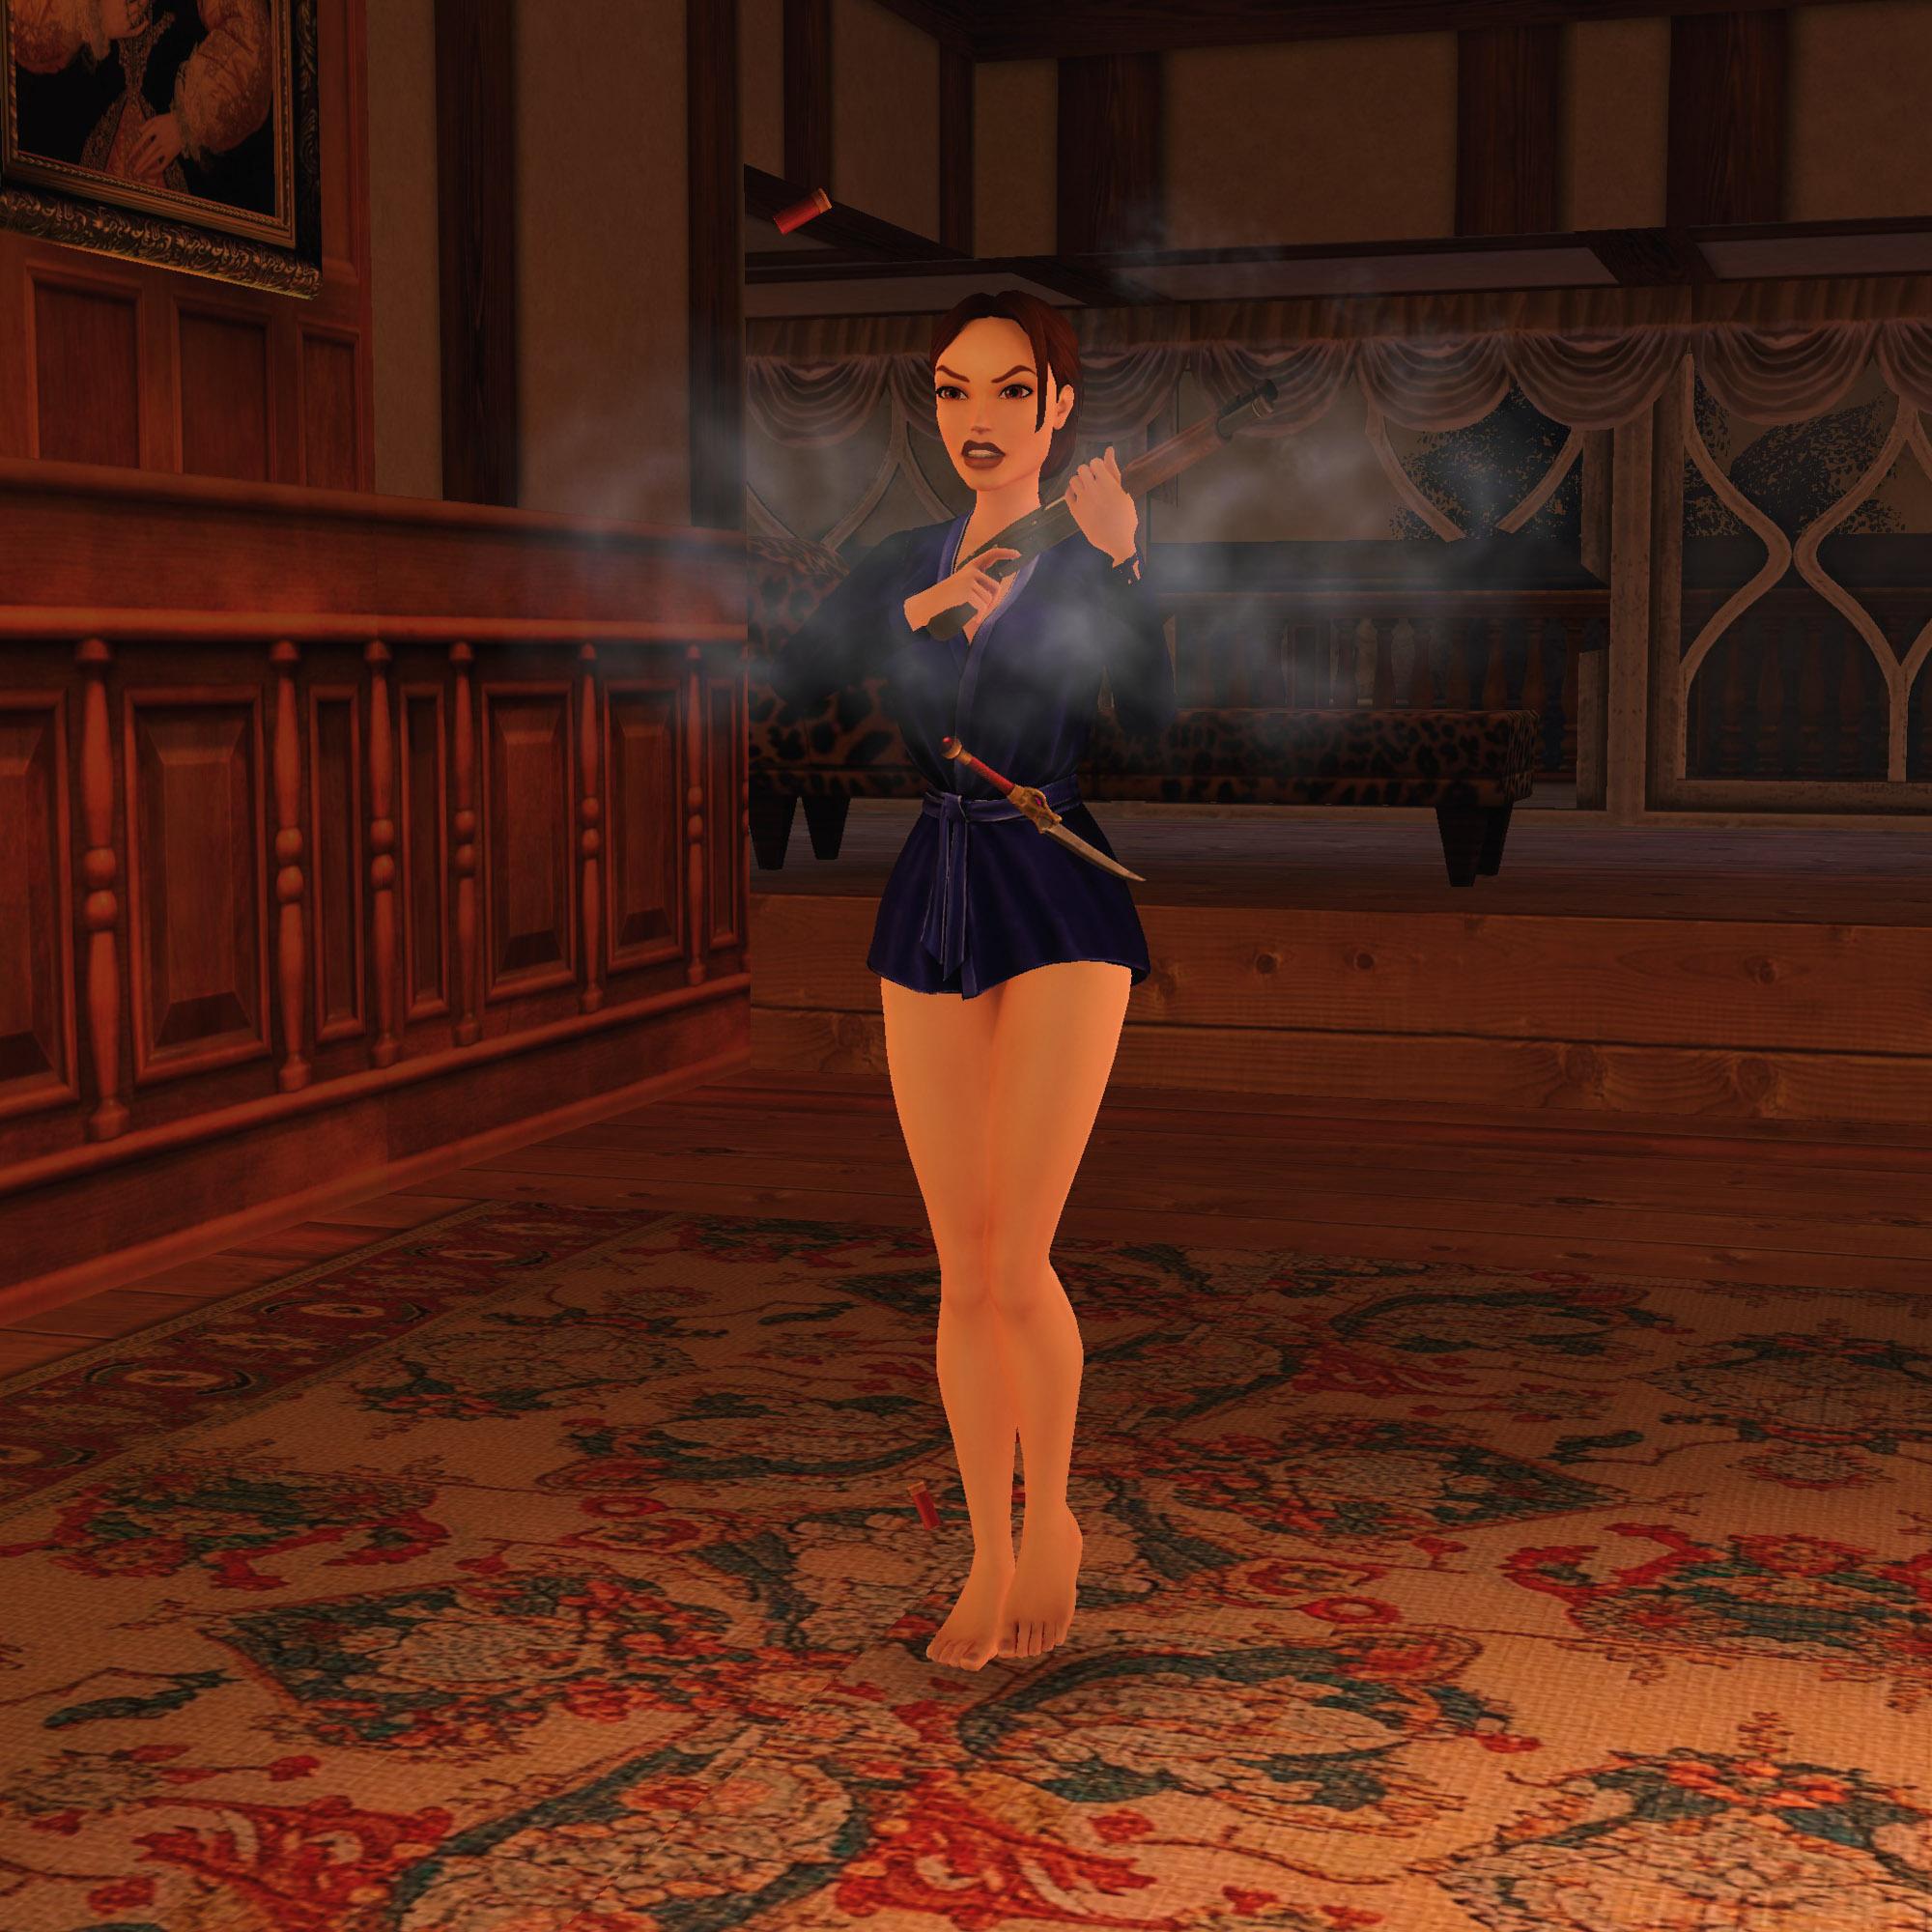 Lara Croft defending Croft Manor from Fiamma Nera with a shotgun.